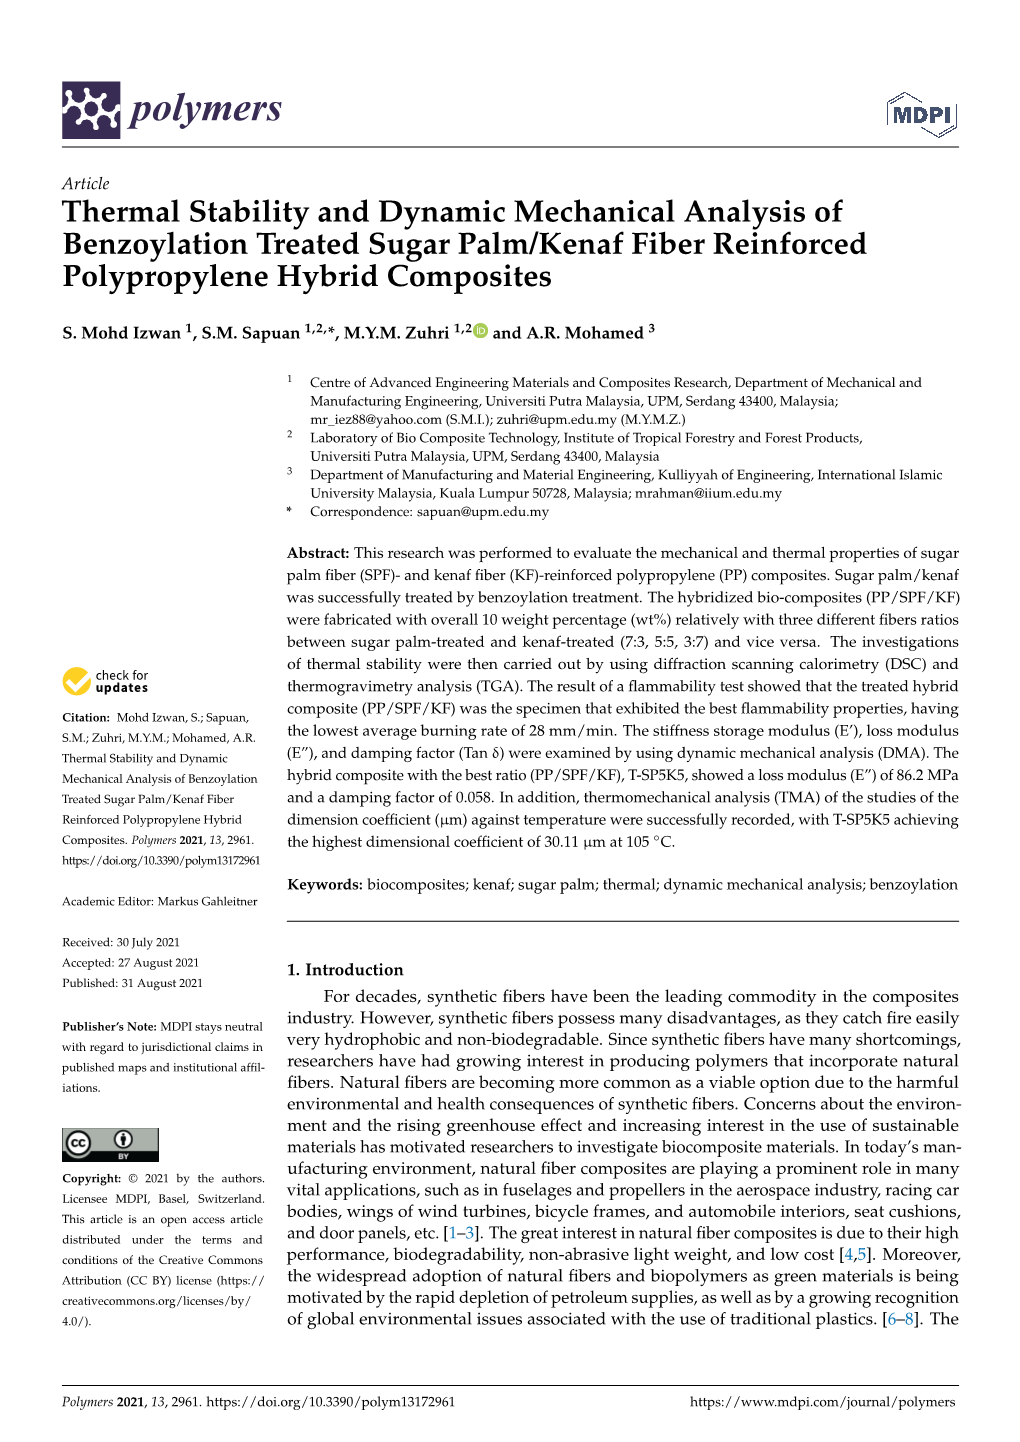 Thermal Stability and Dynamic Mechanical Analysis of Benzoylation Treated Sugar Palm/Kenaf Fiber Reinforced Polypropylene Hybrid Composites